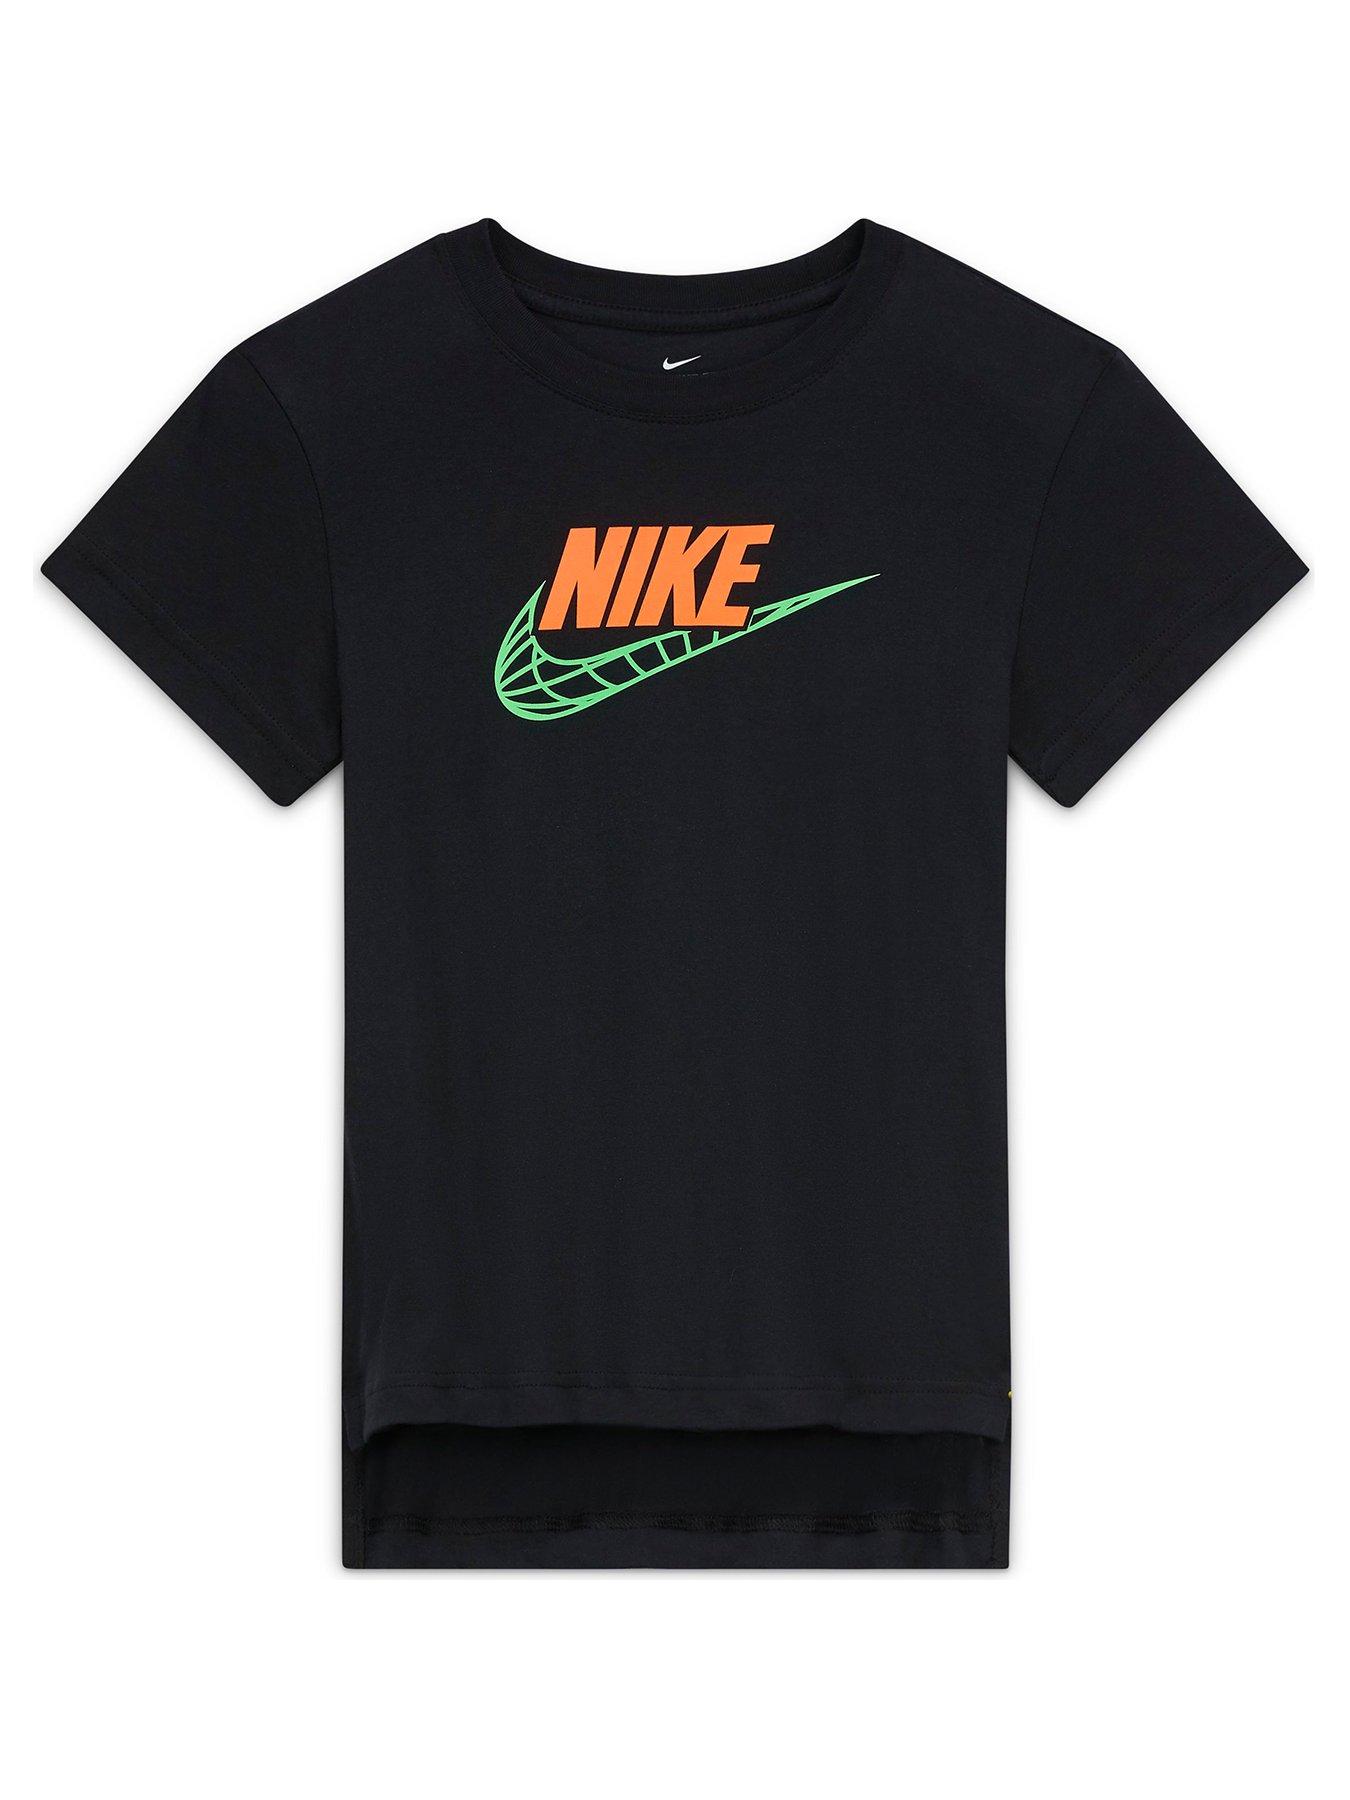 Nike Older Childrens T-Shirt - Black, Size Xl=13-15 Years, Women